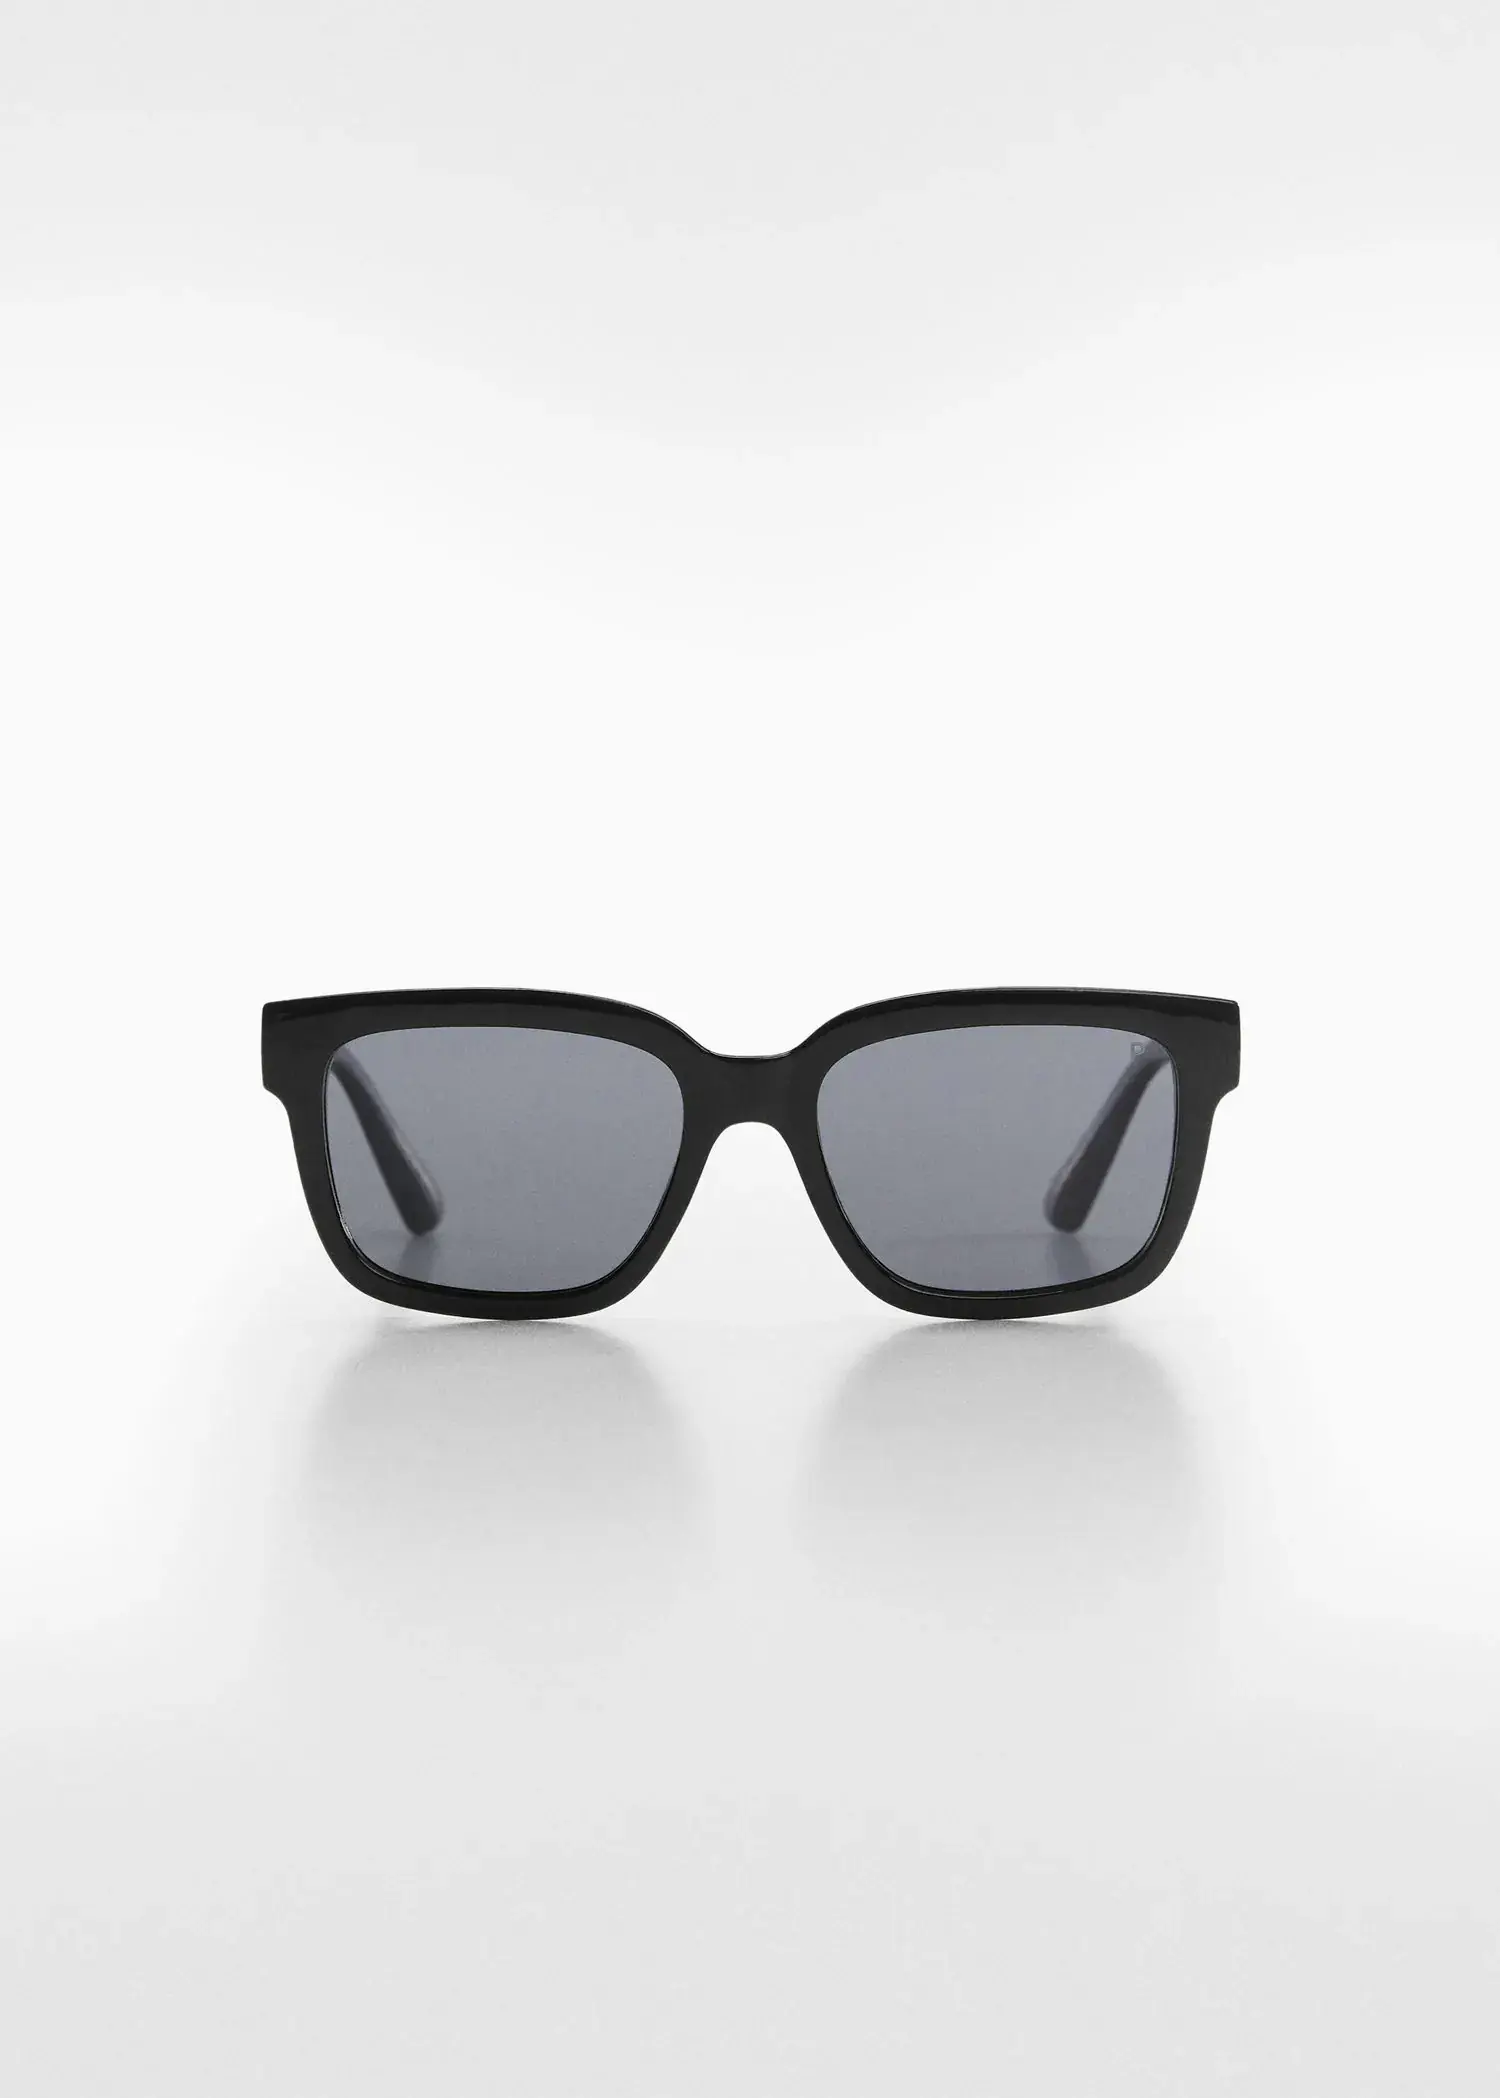 Mango Polarised sunglasses. a pair of sunglasses on a white surface. 